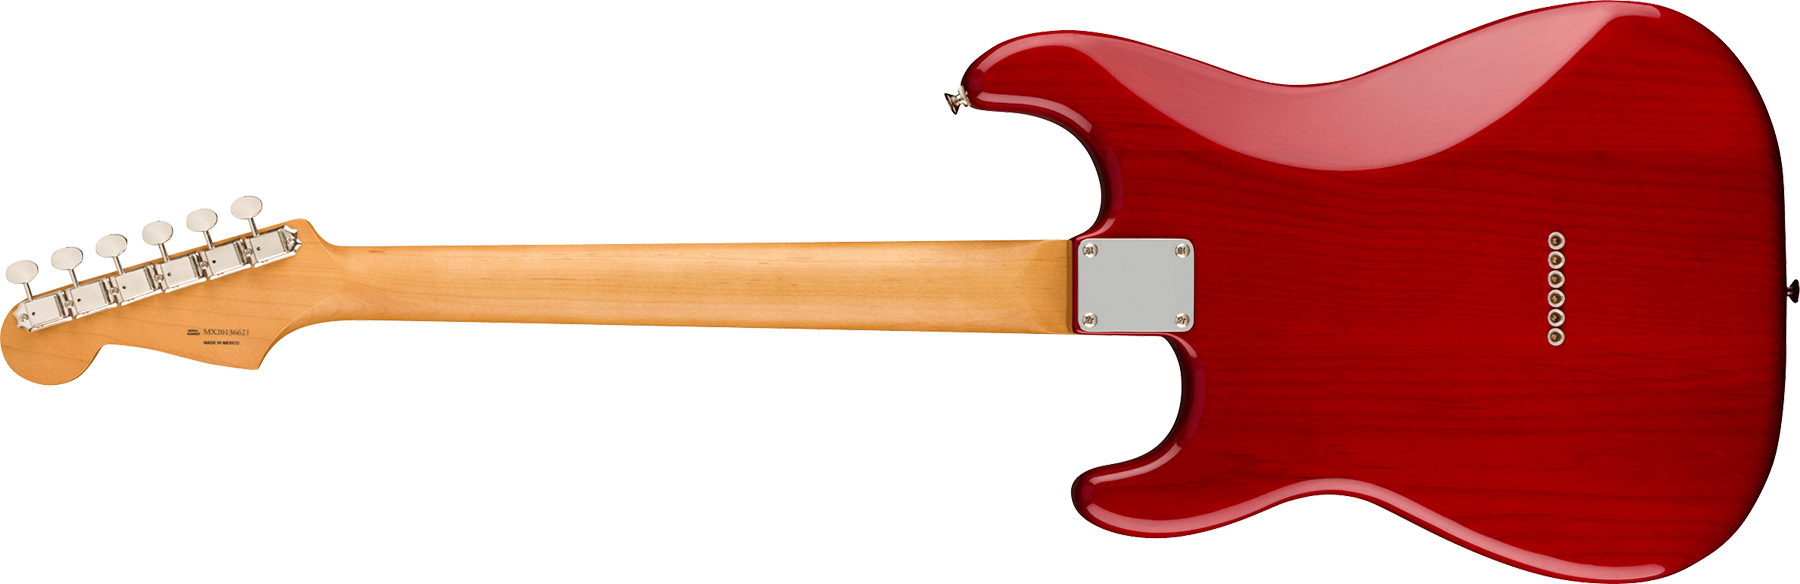 Fender Strat Noventa Mex Ss Ht Pf +housse - Crimson Red Transparent - Guitare Électrique Forme Str - Variation 1